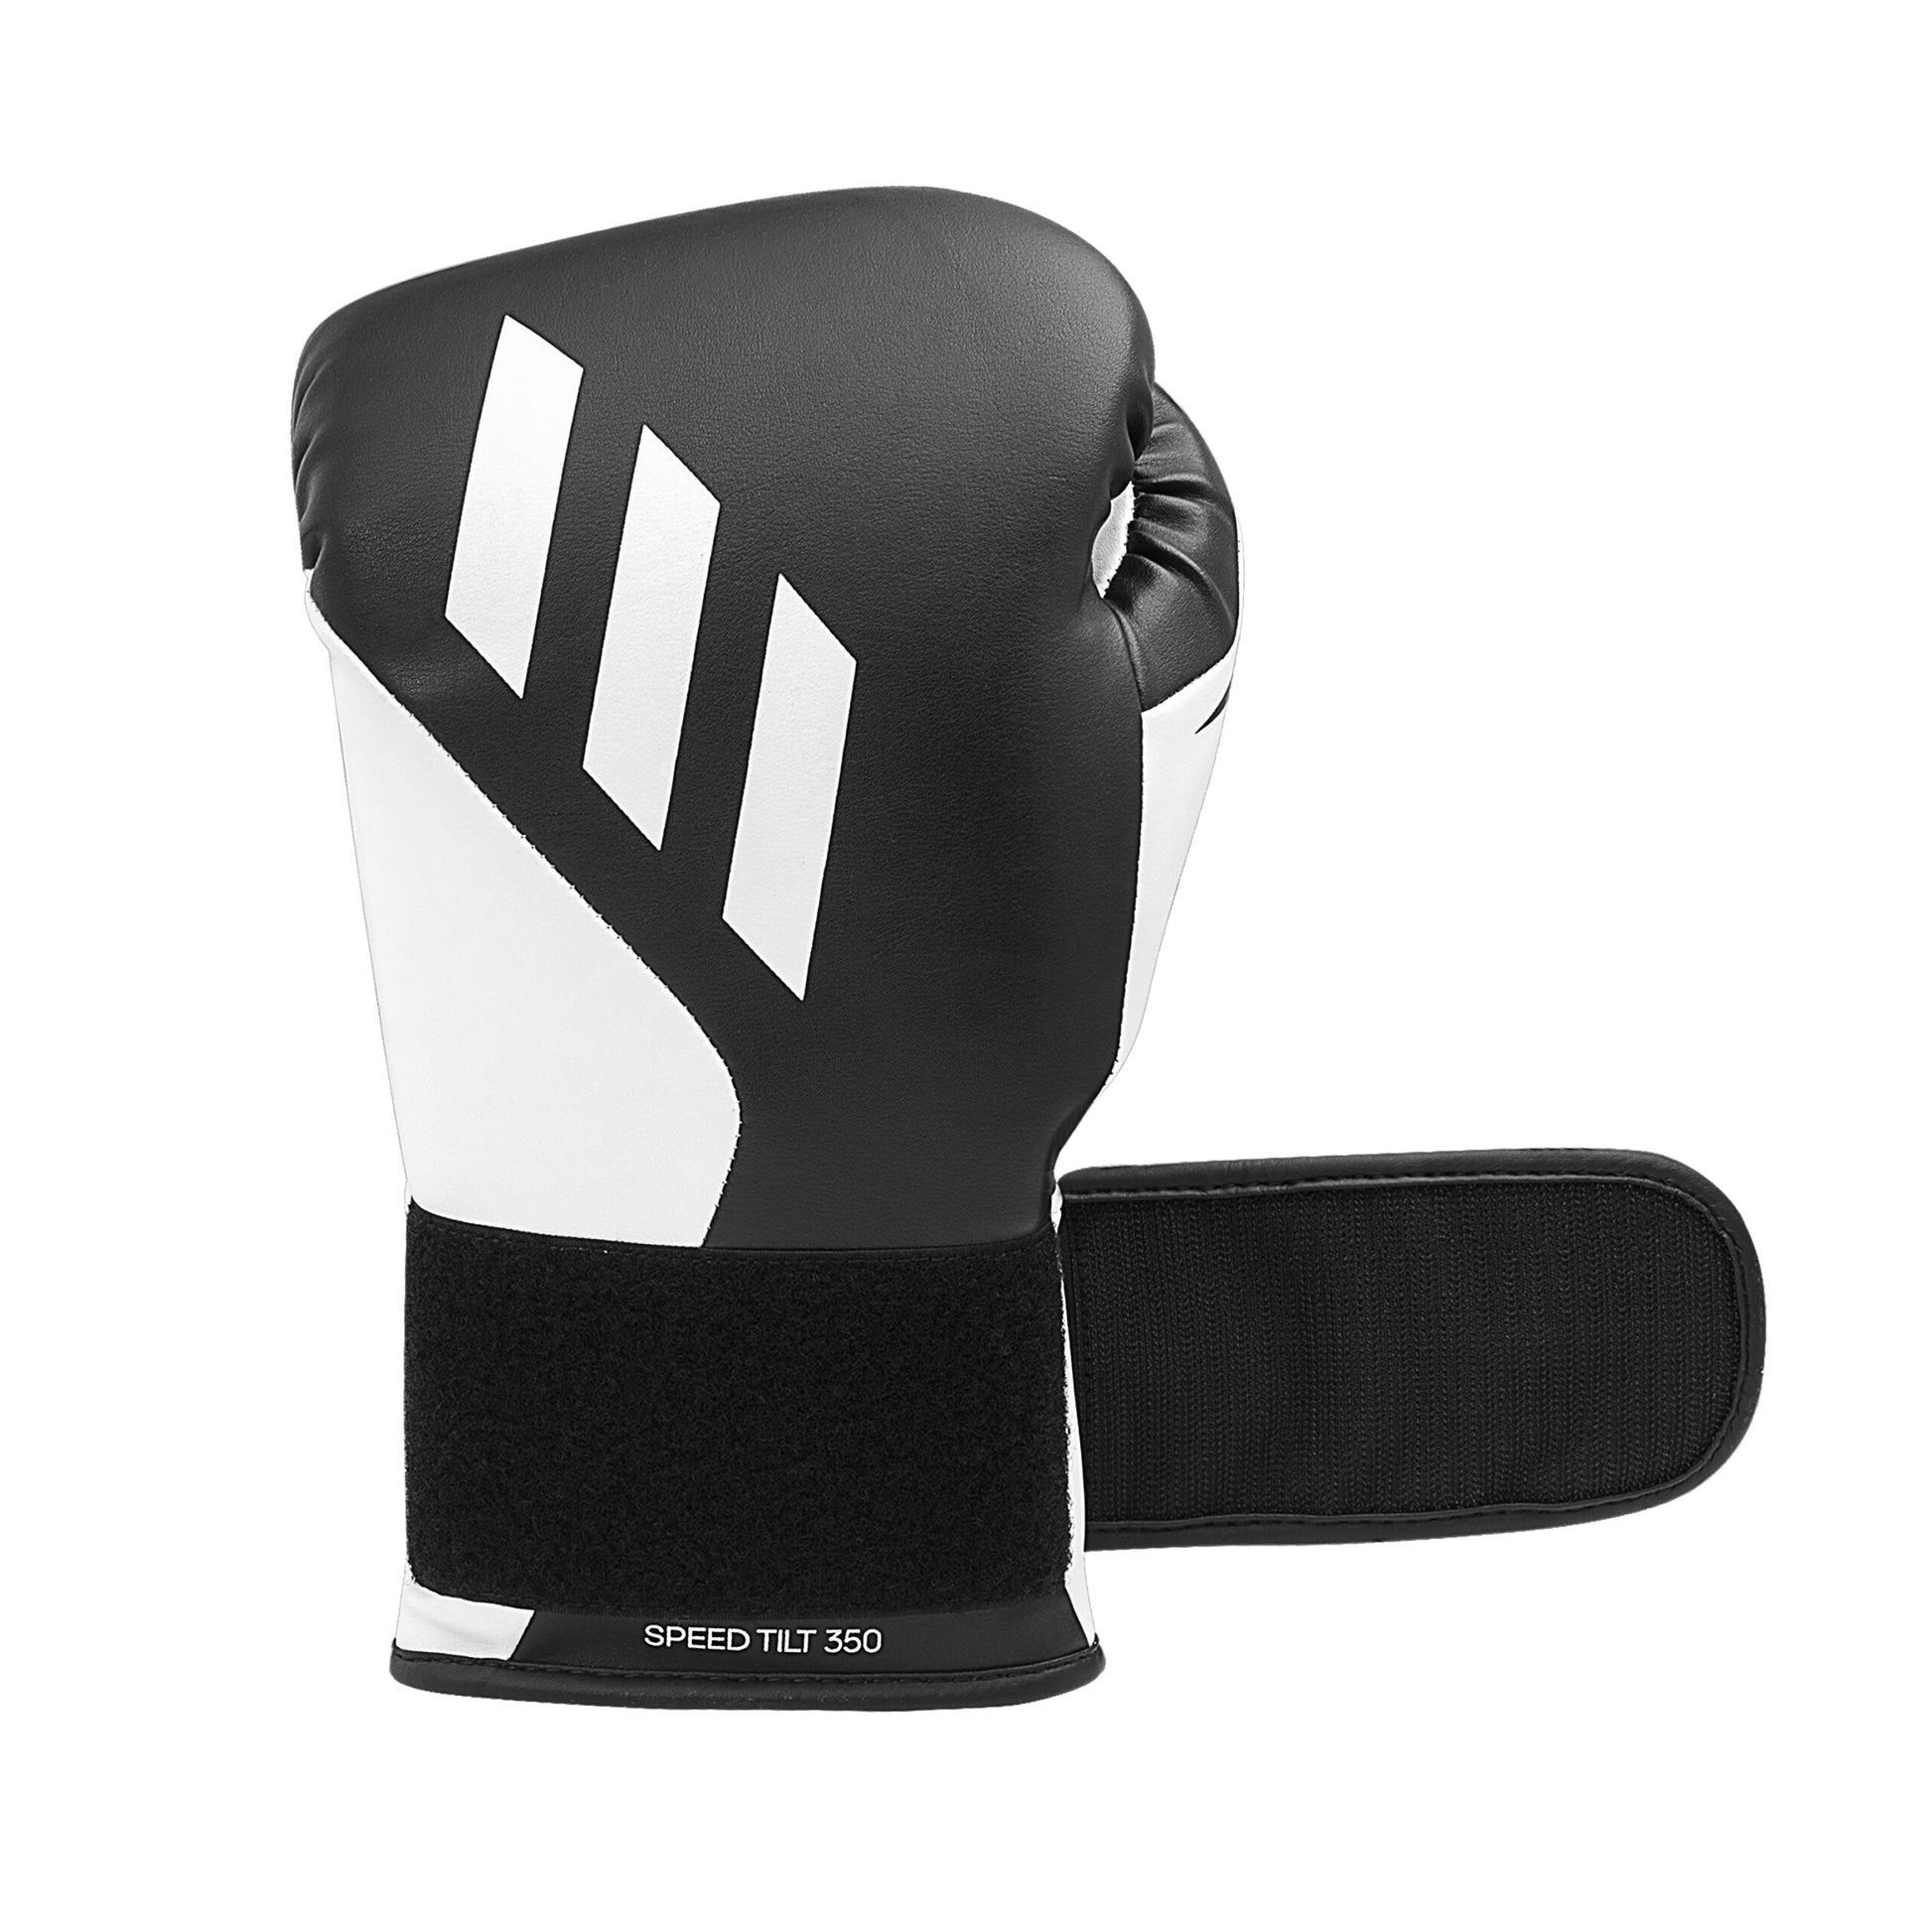 Adispd350tg Adidas Tilt 350 Pro Training Boxing Glove Strap Black White 05